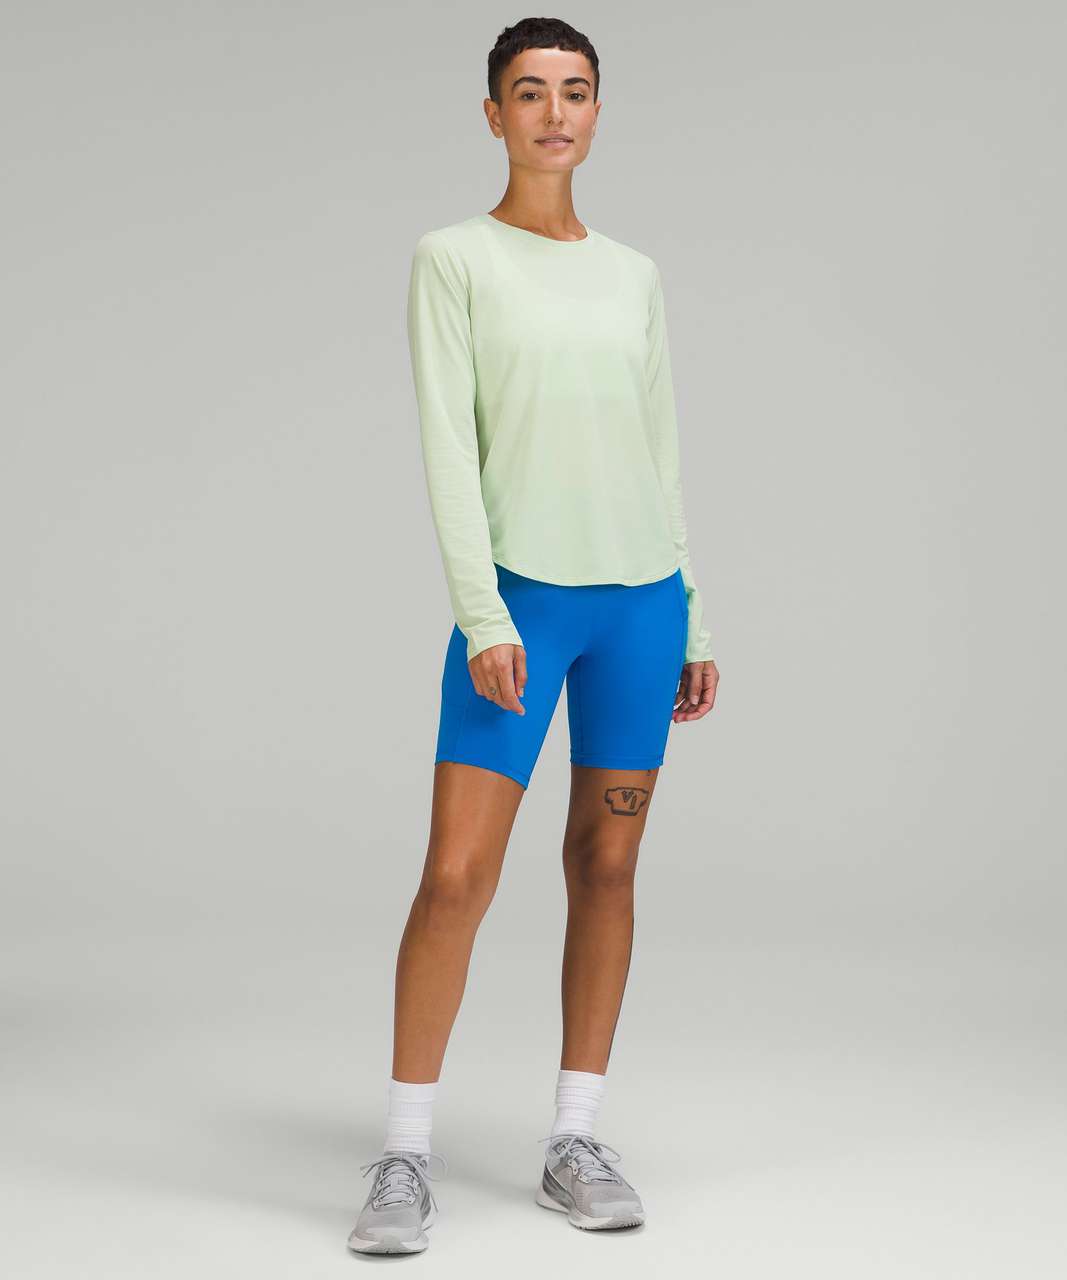 Lululemon High-Neck Running and Training Long Sleeve Shirt - Creamy Mint